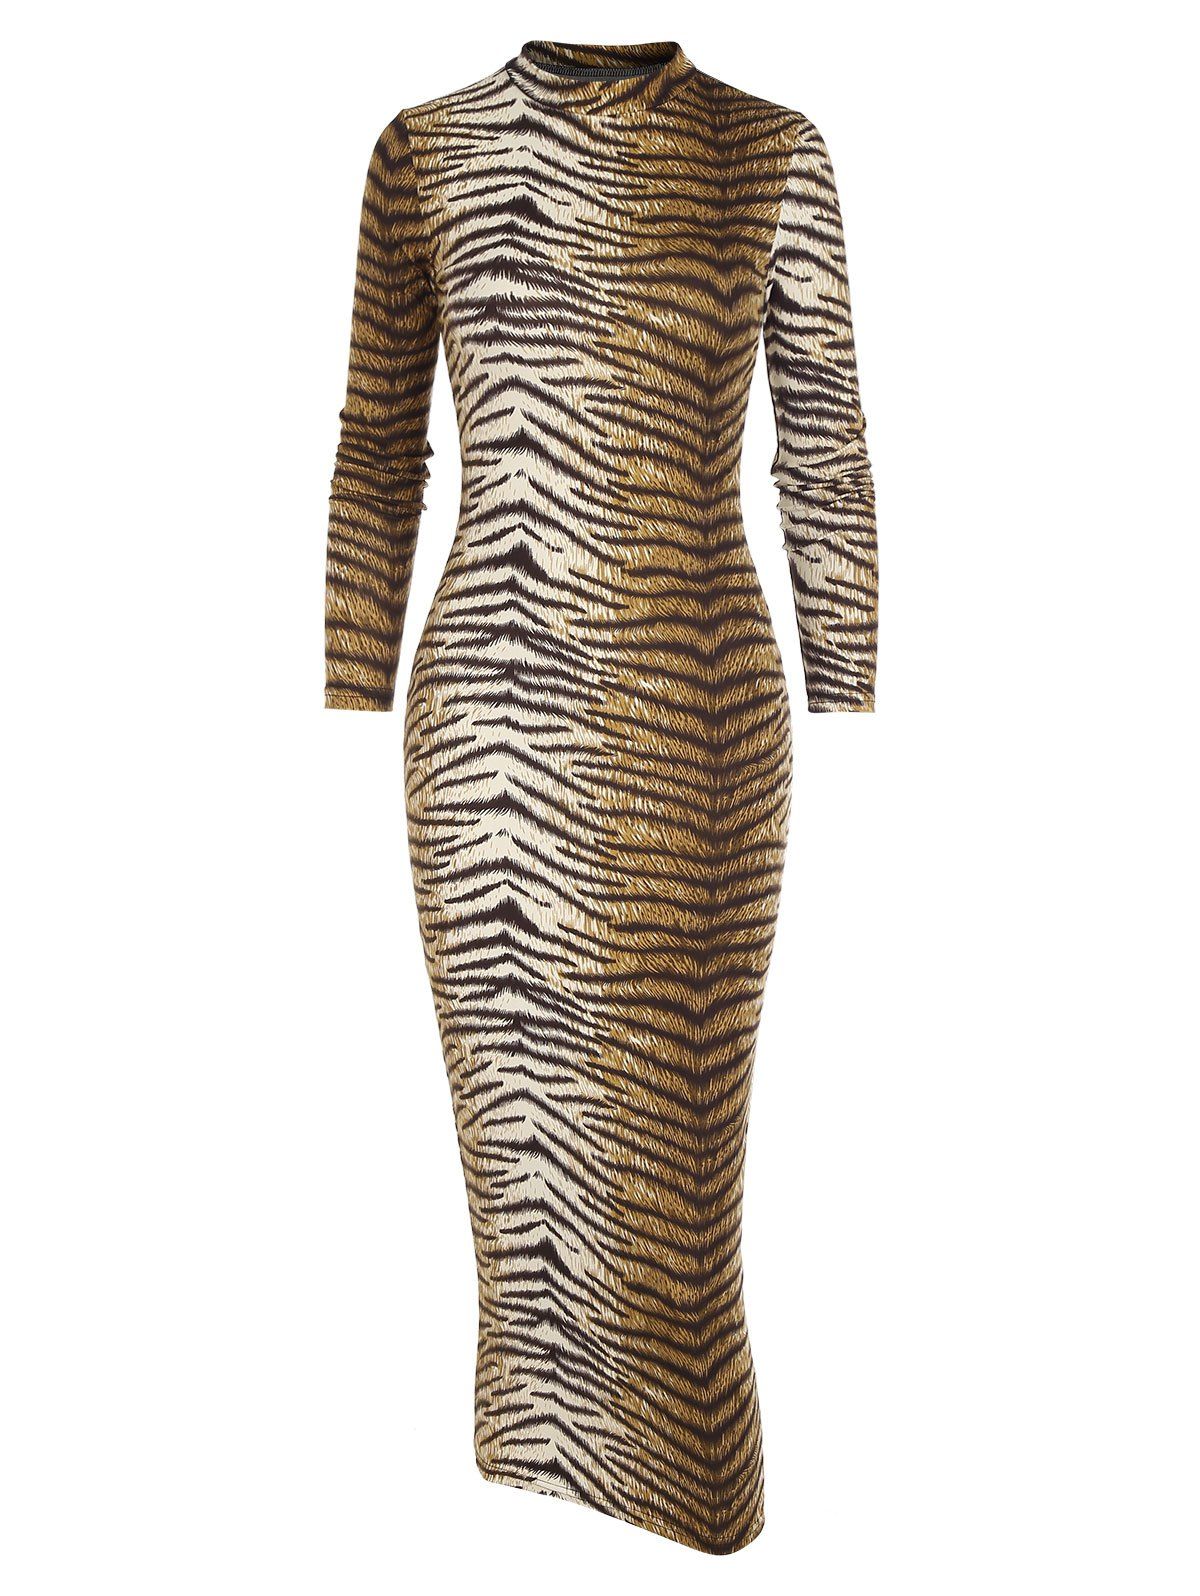 Tiger Print Midi Bodycon Dress - COFFEE M